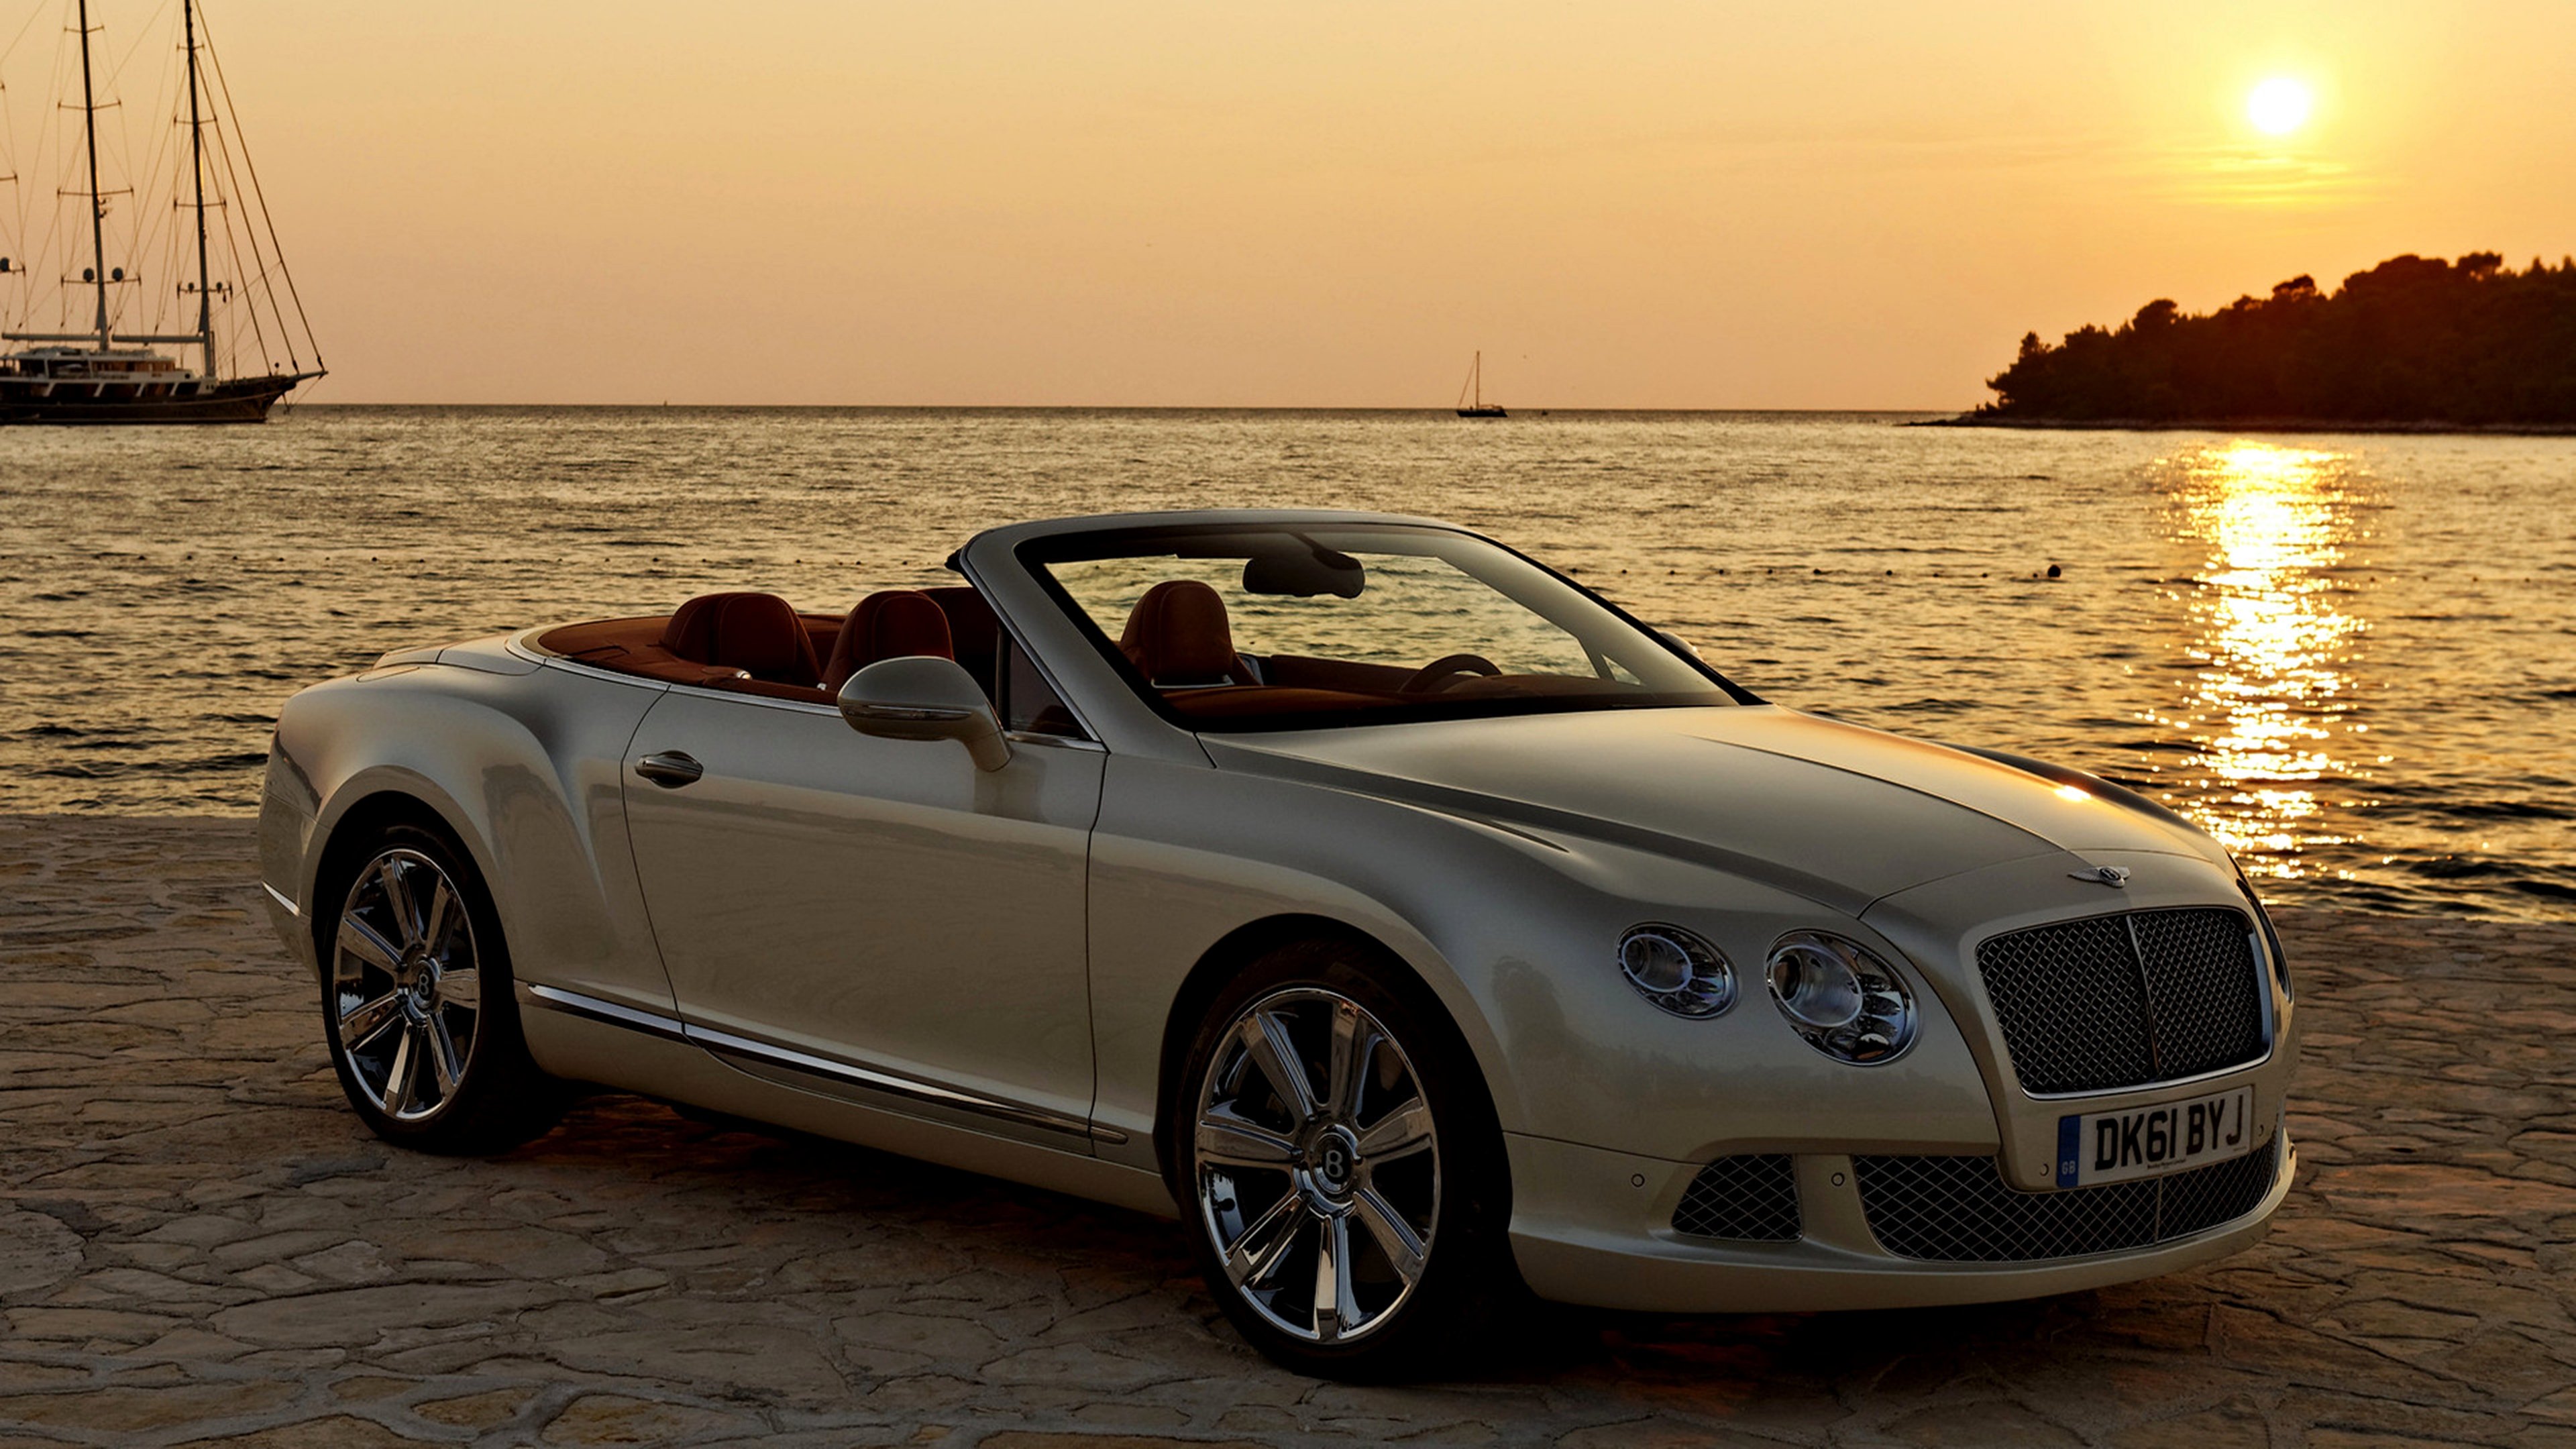 2011, Bentley, Continental, Gtc, Sea, Cars, Roof, Sunset, Beach, Boat, Landscape, Speed, Motors Wallpaper